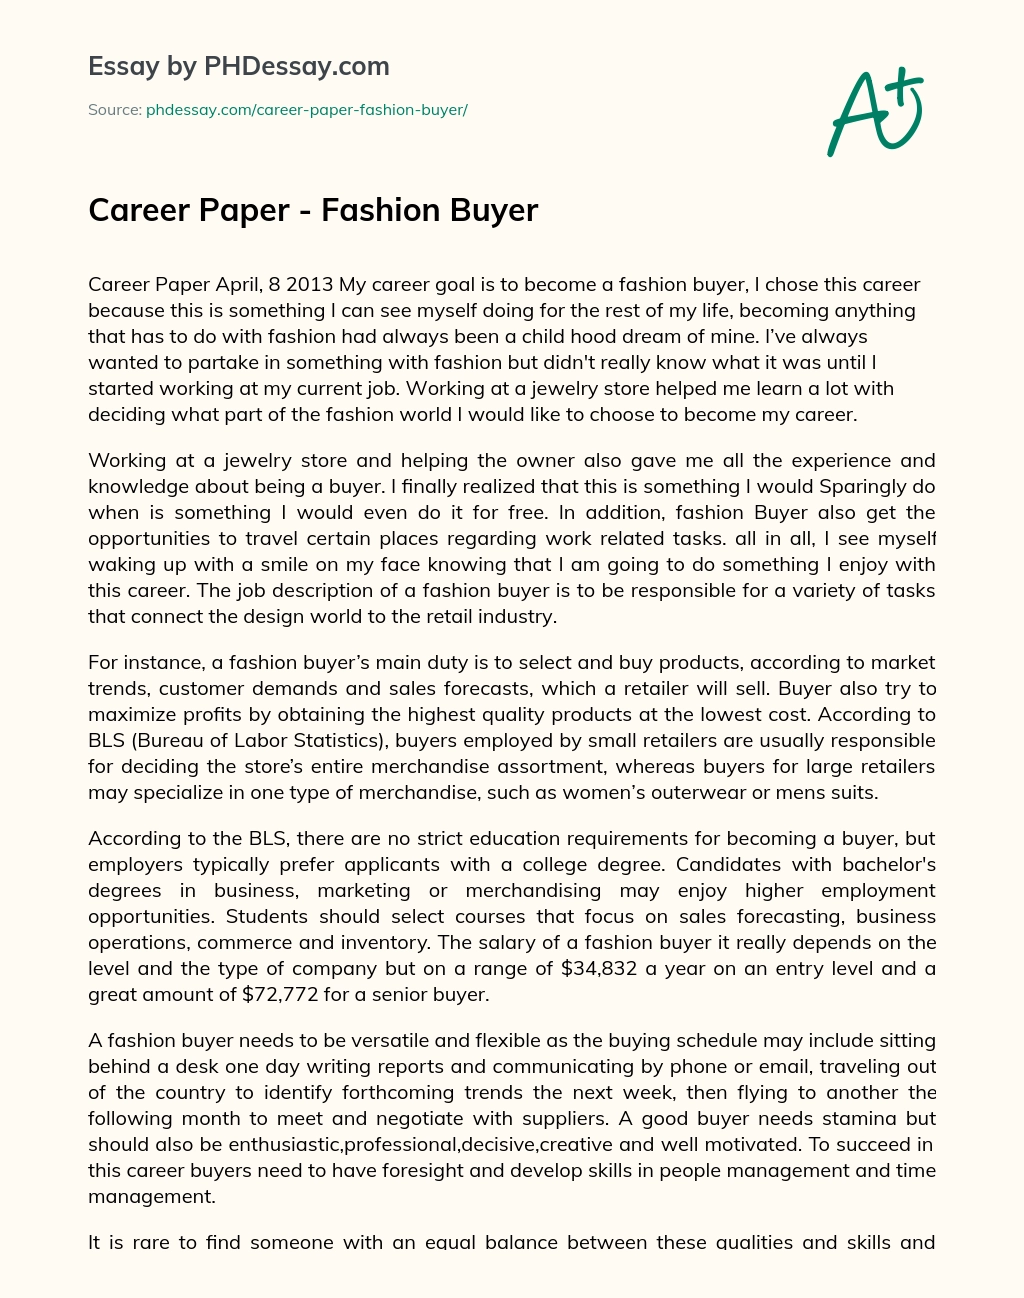 Career Paper – Fashion Buyer essay